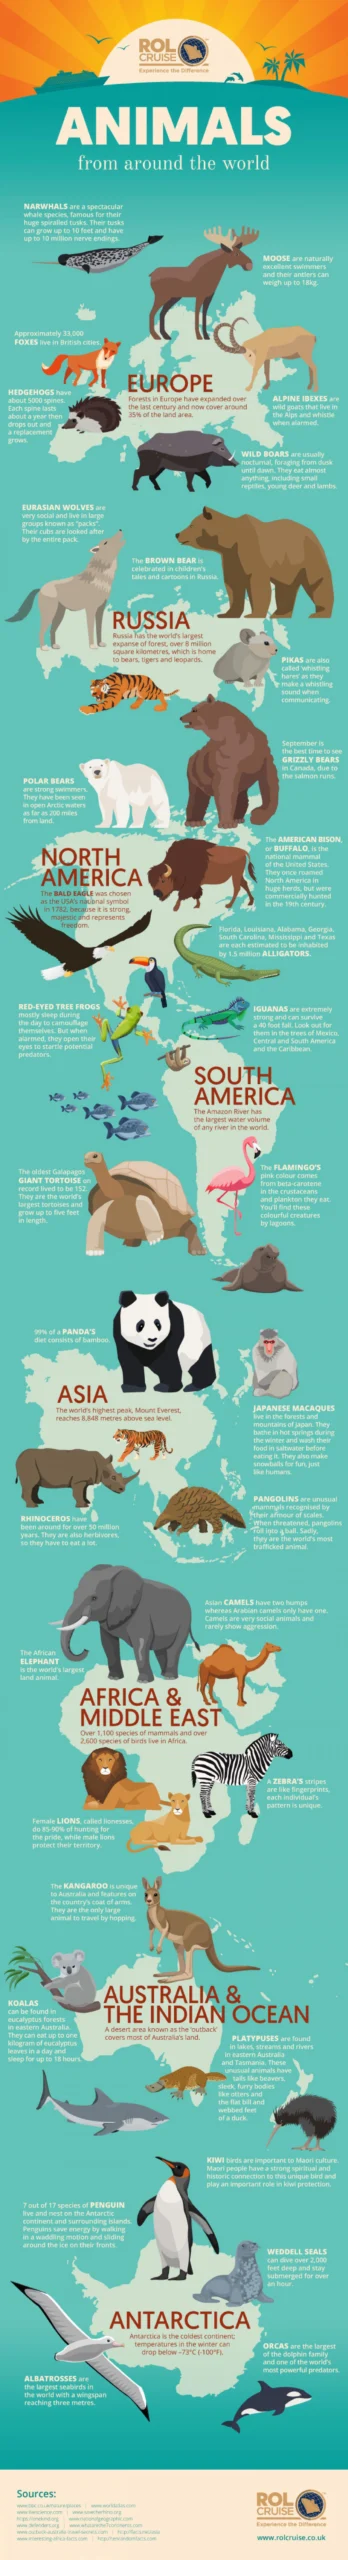 Animals From Around The World [Infographic]